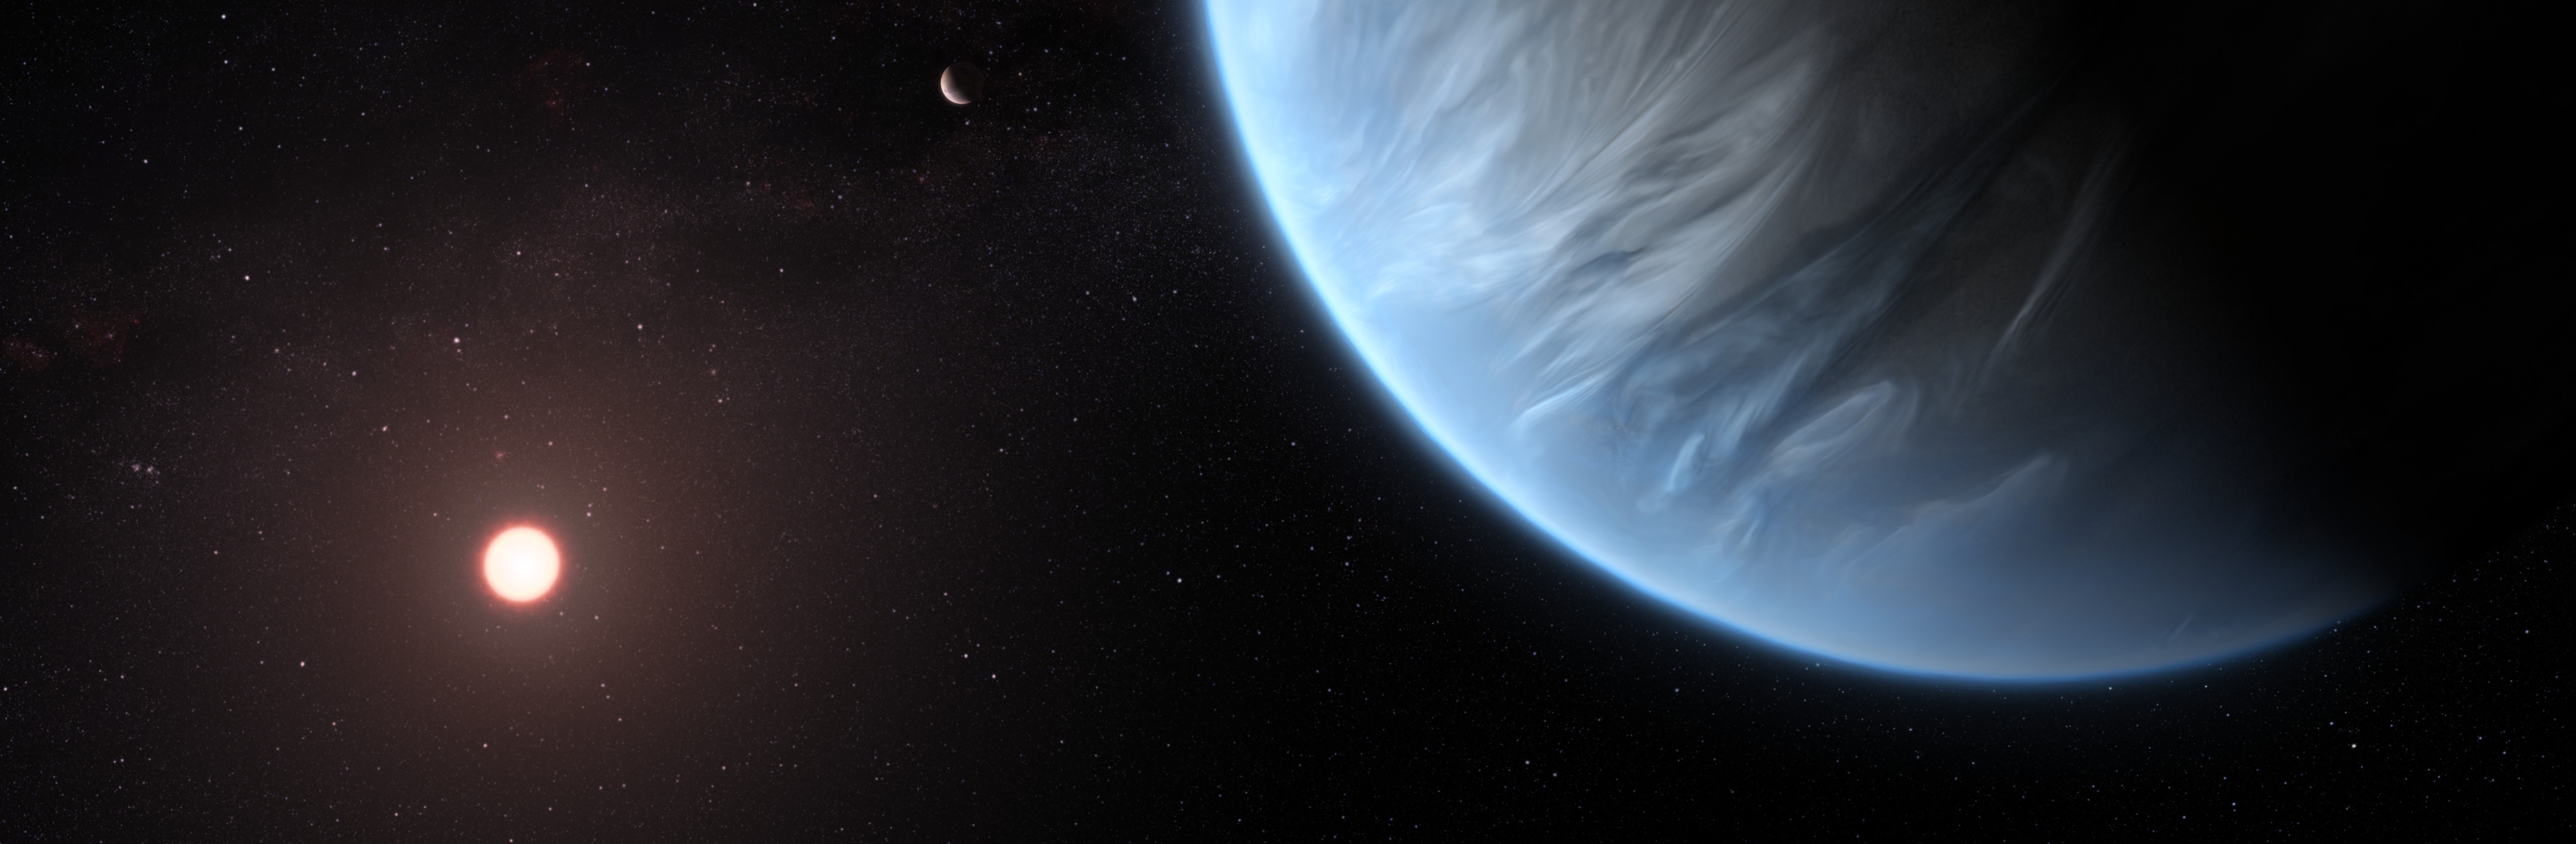 Water world exoplanet K2-18b